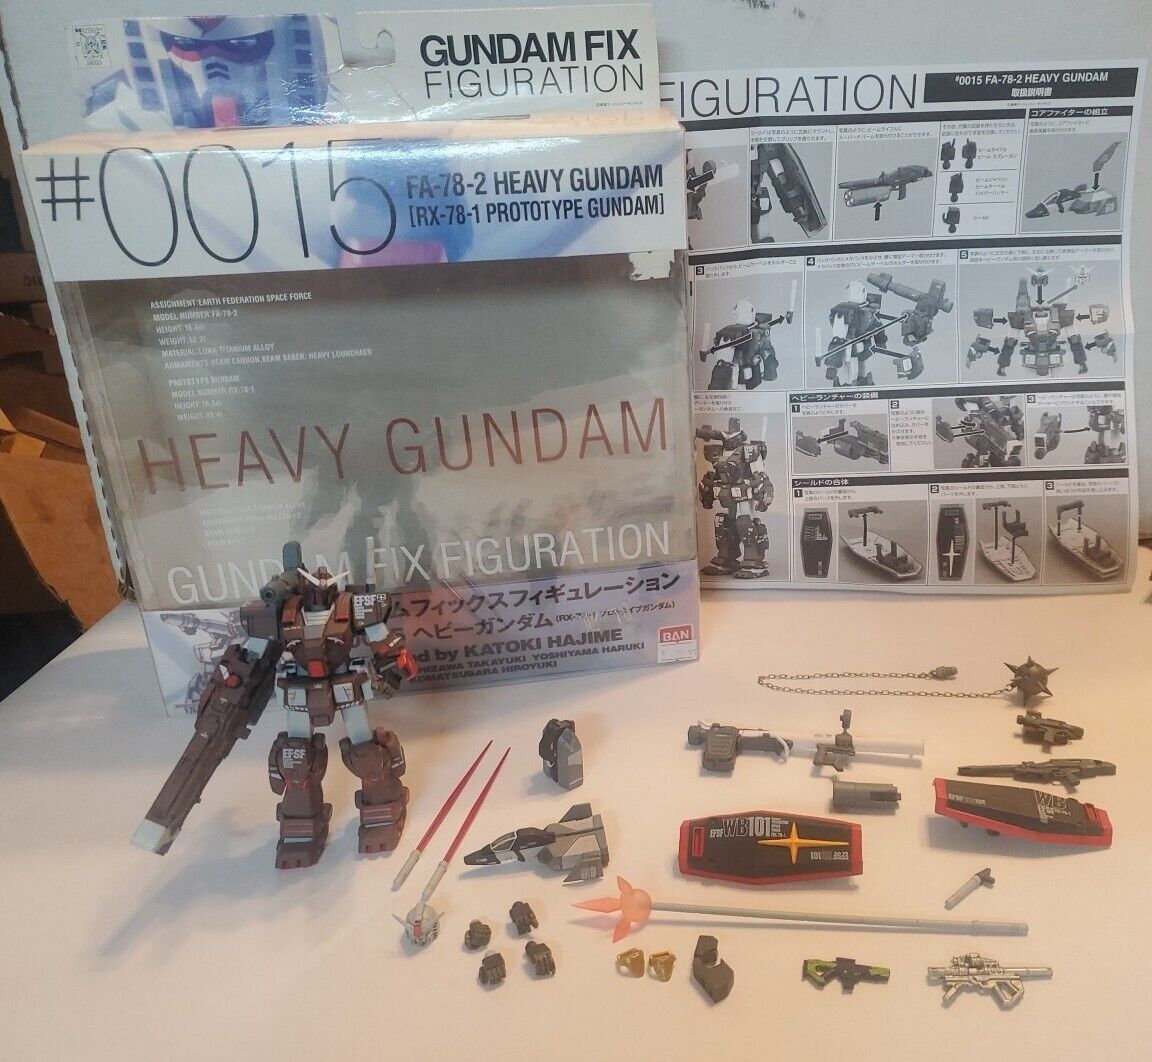 Bandai Gundam Fix Figuration #0015 Heavy Gundam GFF FA-78-2 Prototype RX-78-2